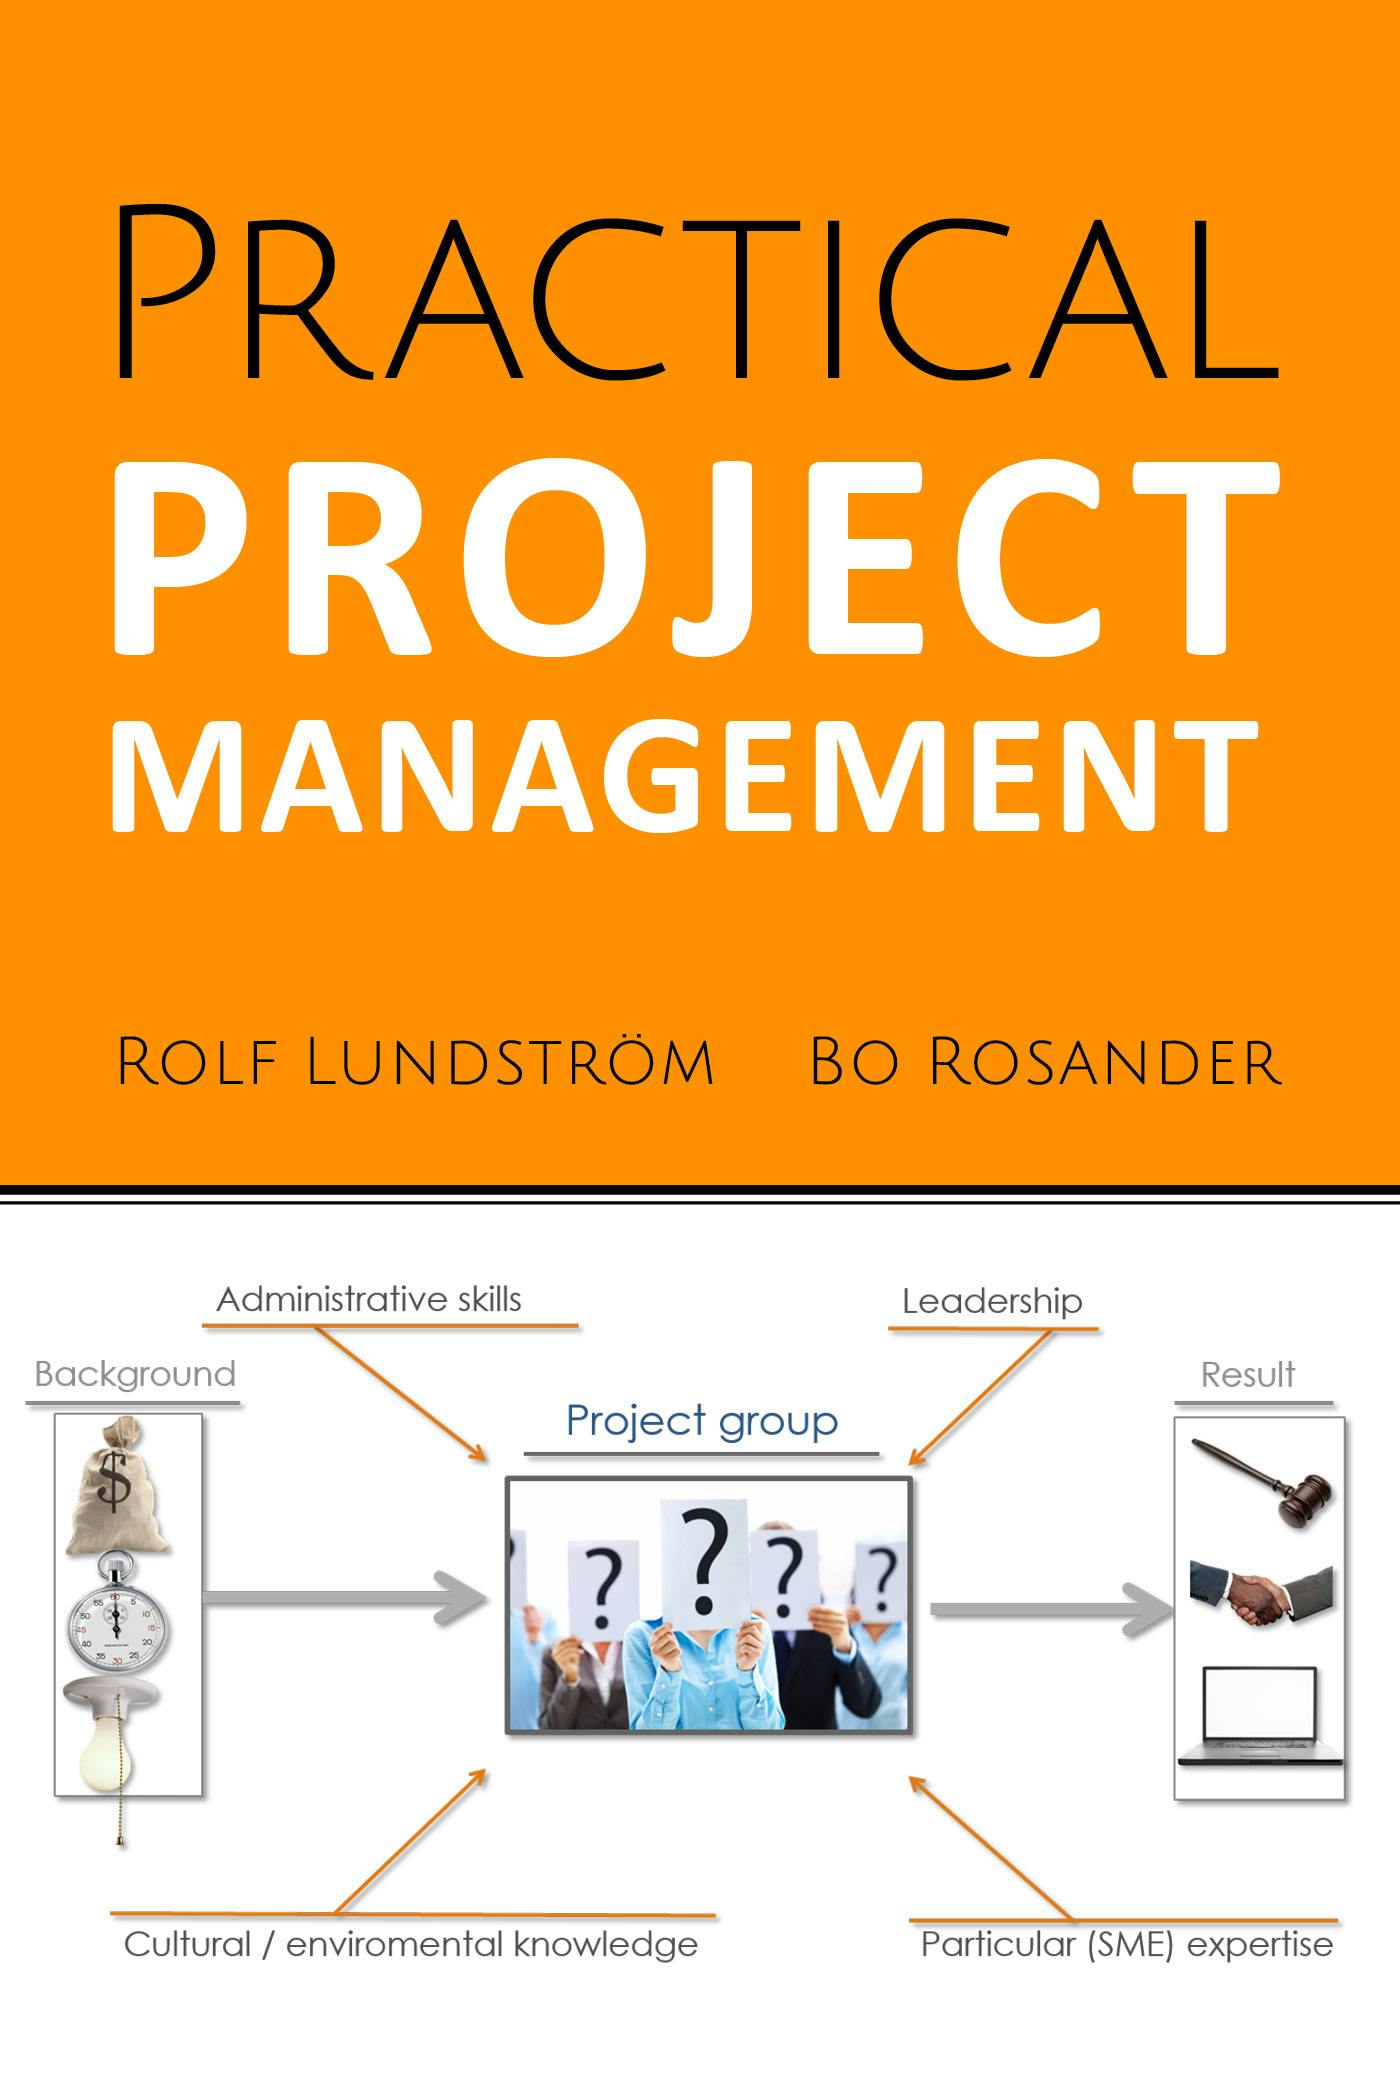 Practical Project Management - undefined